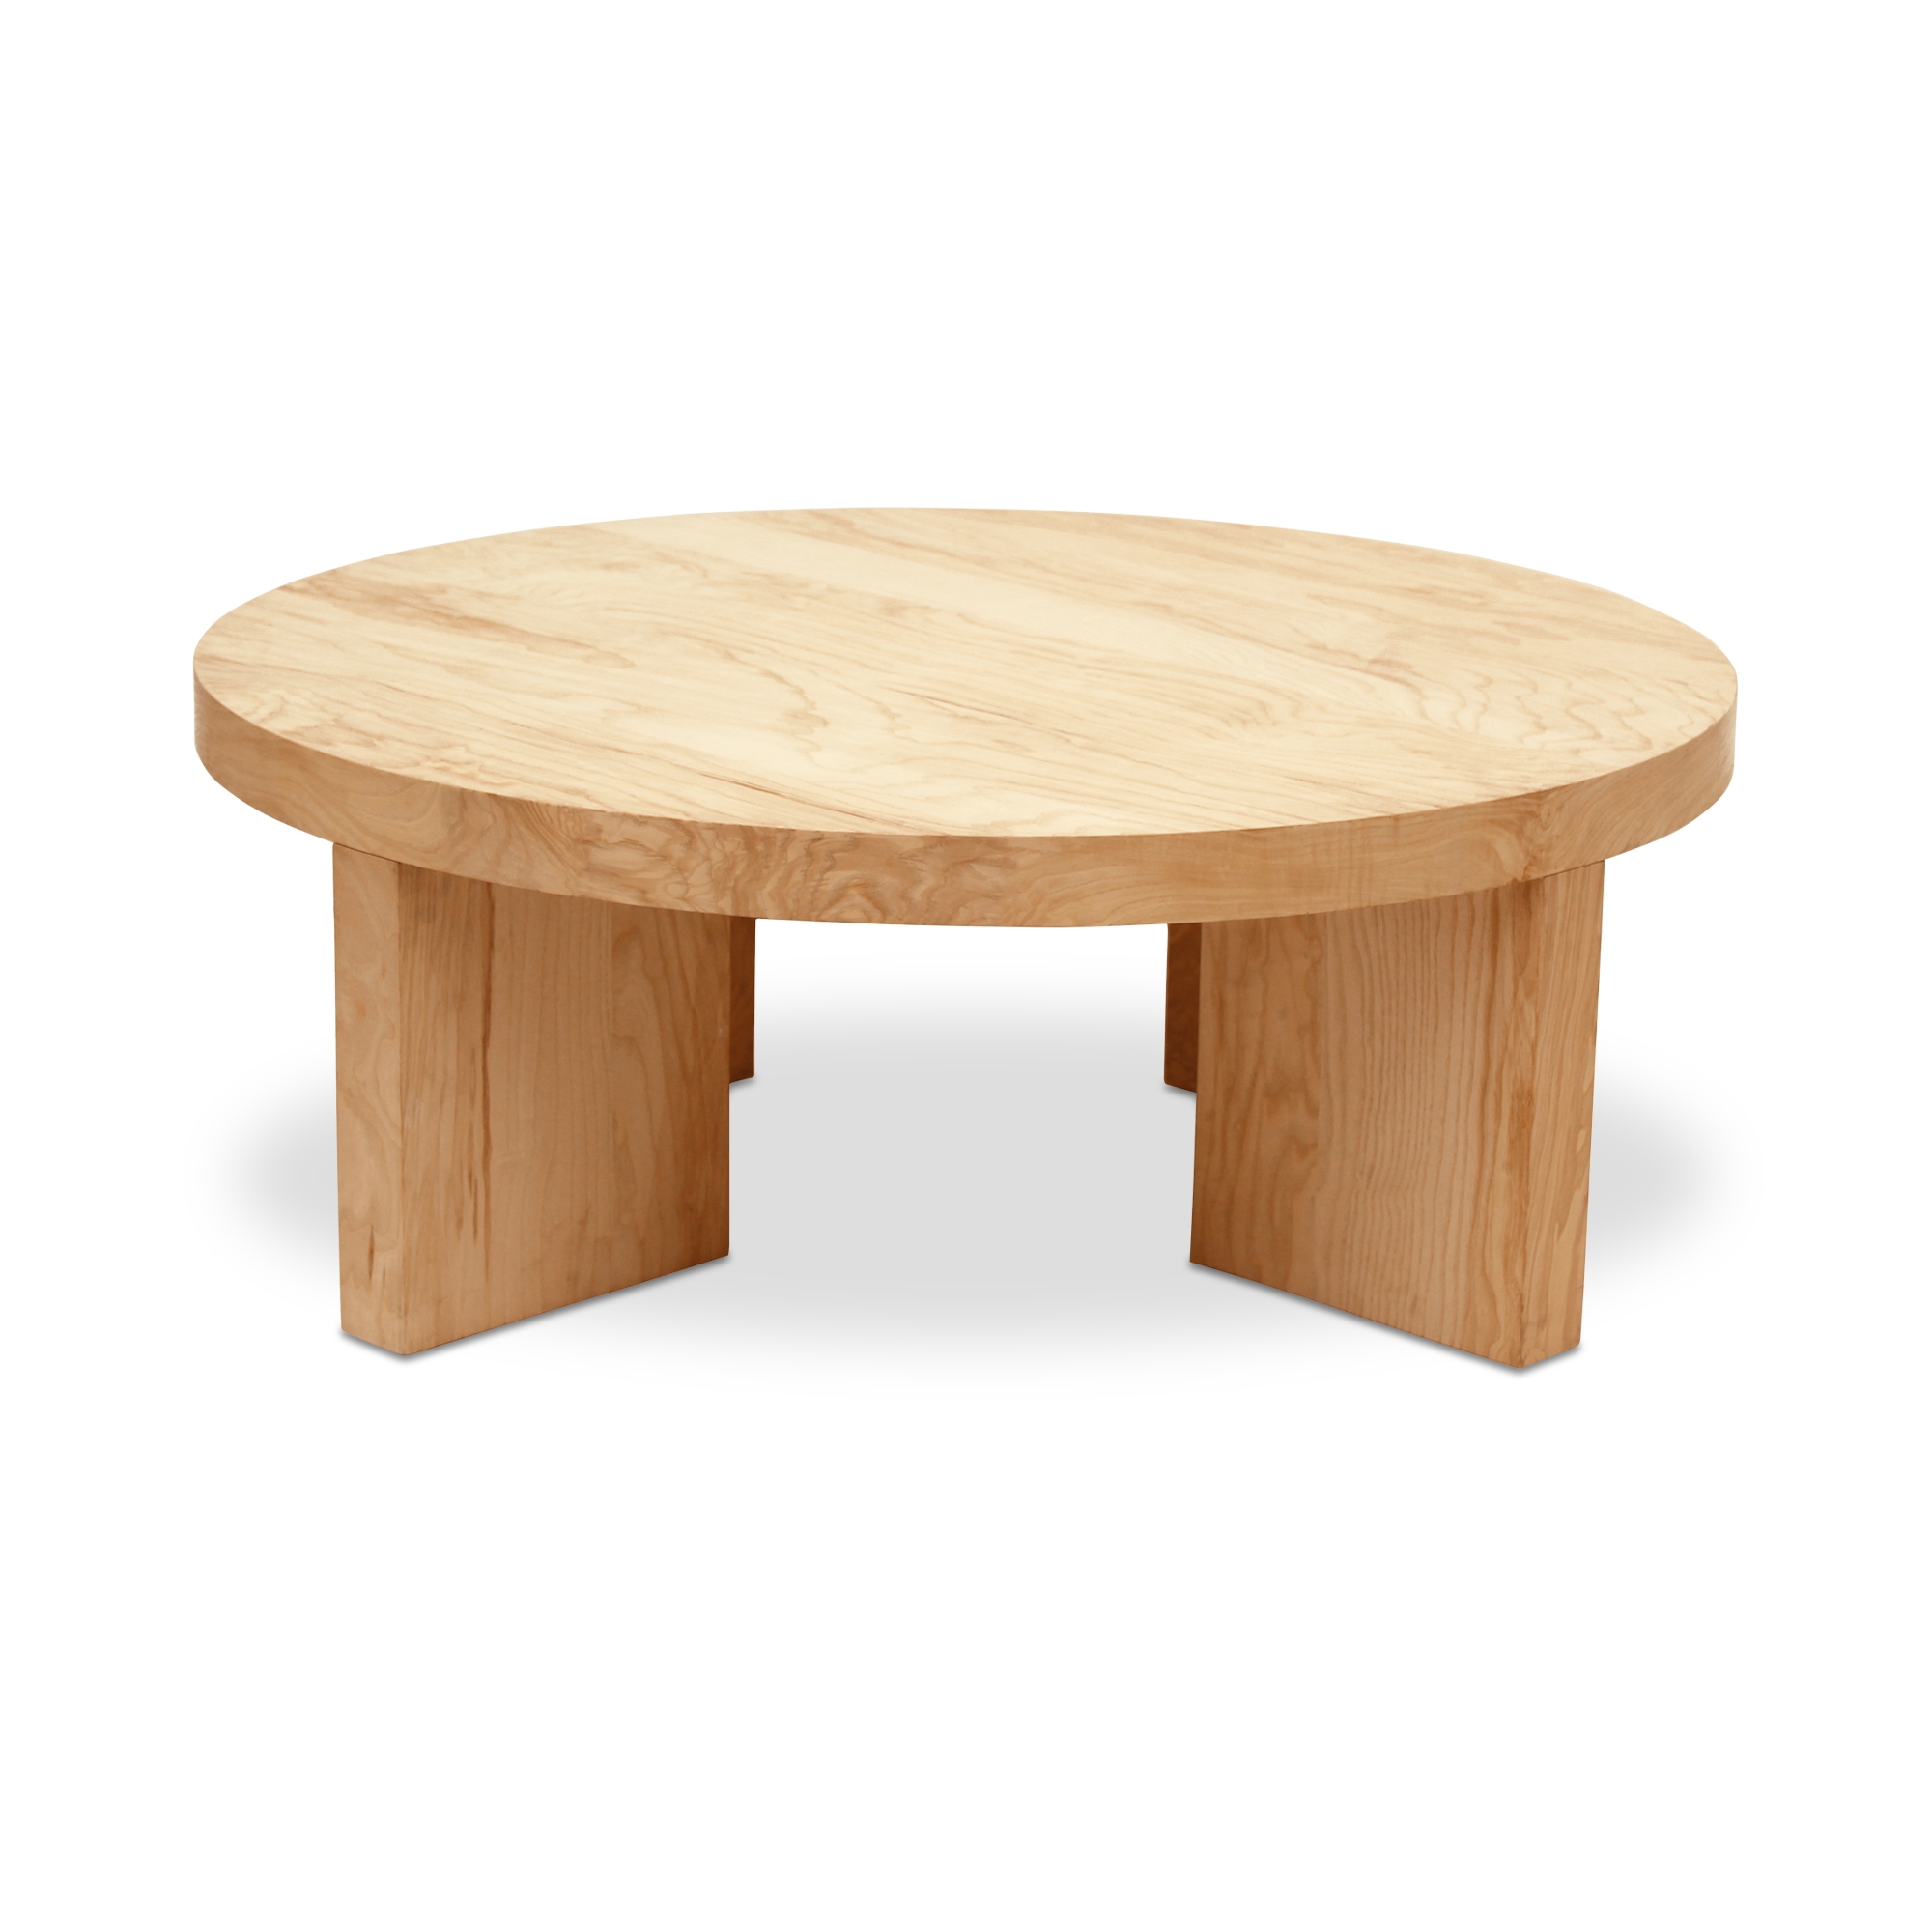 Oregon Round Coffee Table Blonde - Image 1